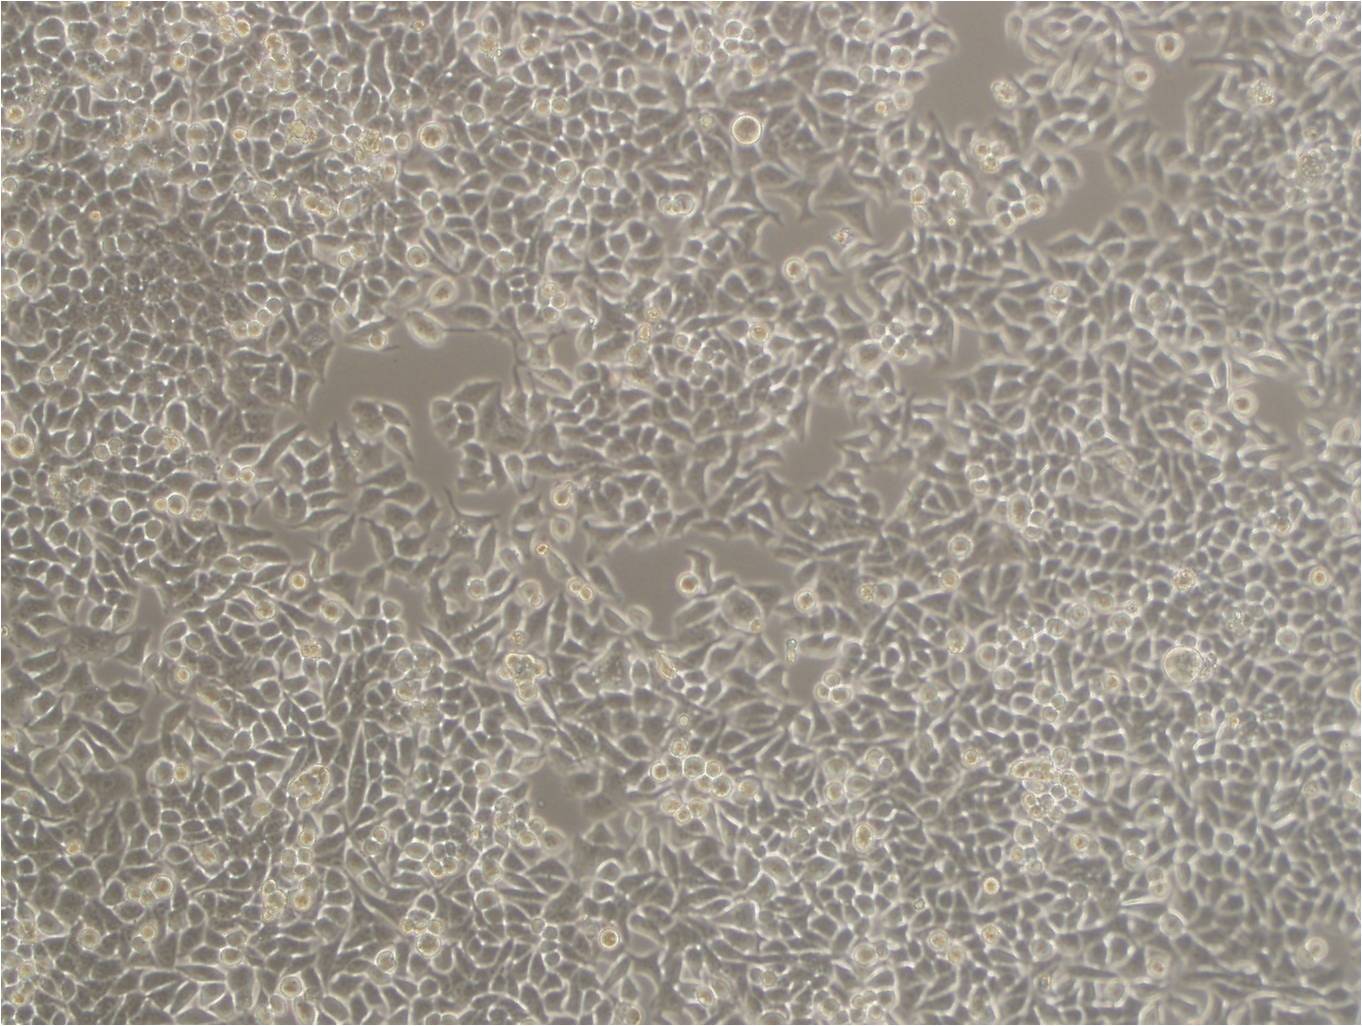 UPCI-SCC-154 epithelioid cells人舌鳞癌细胞系